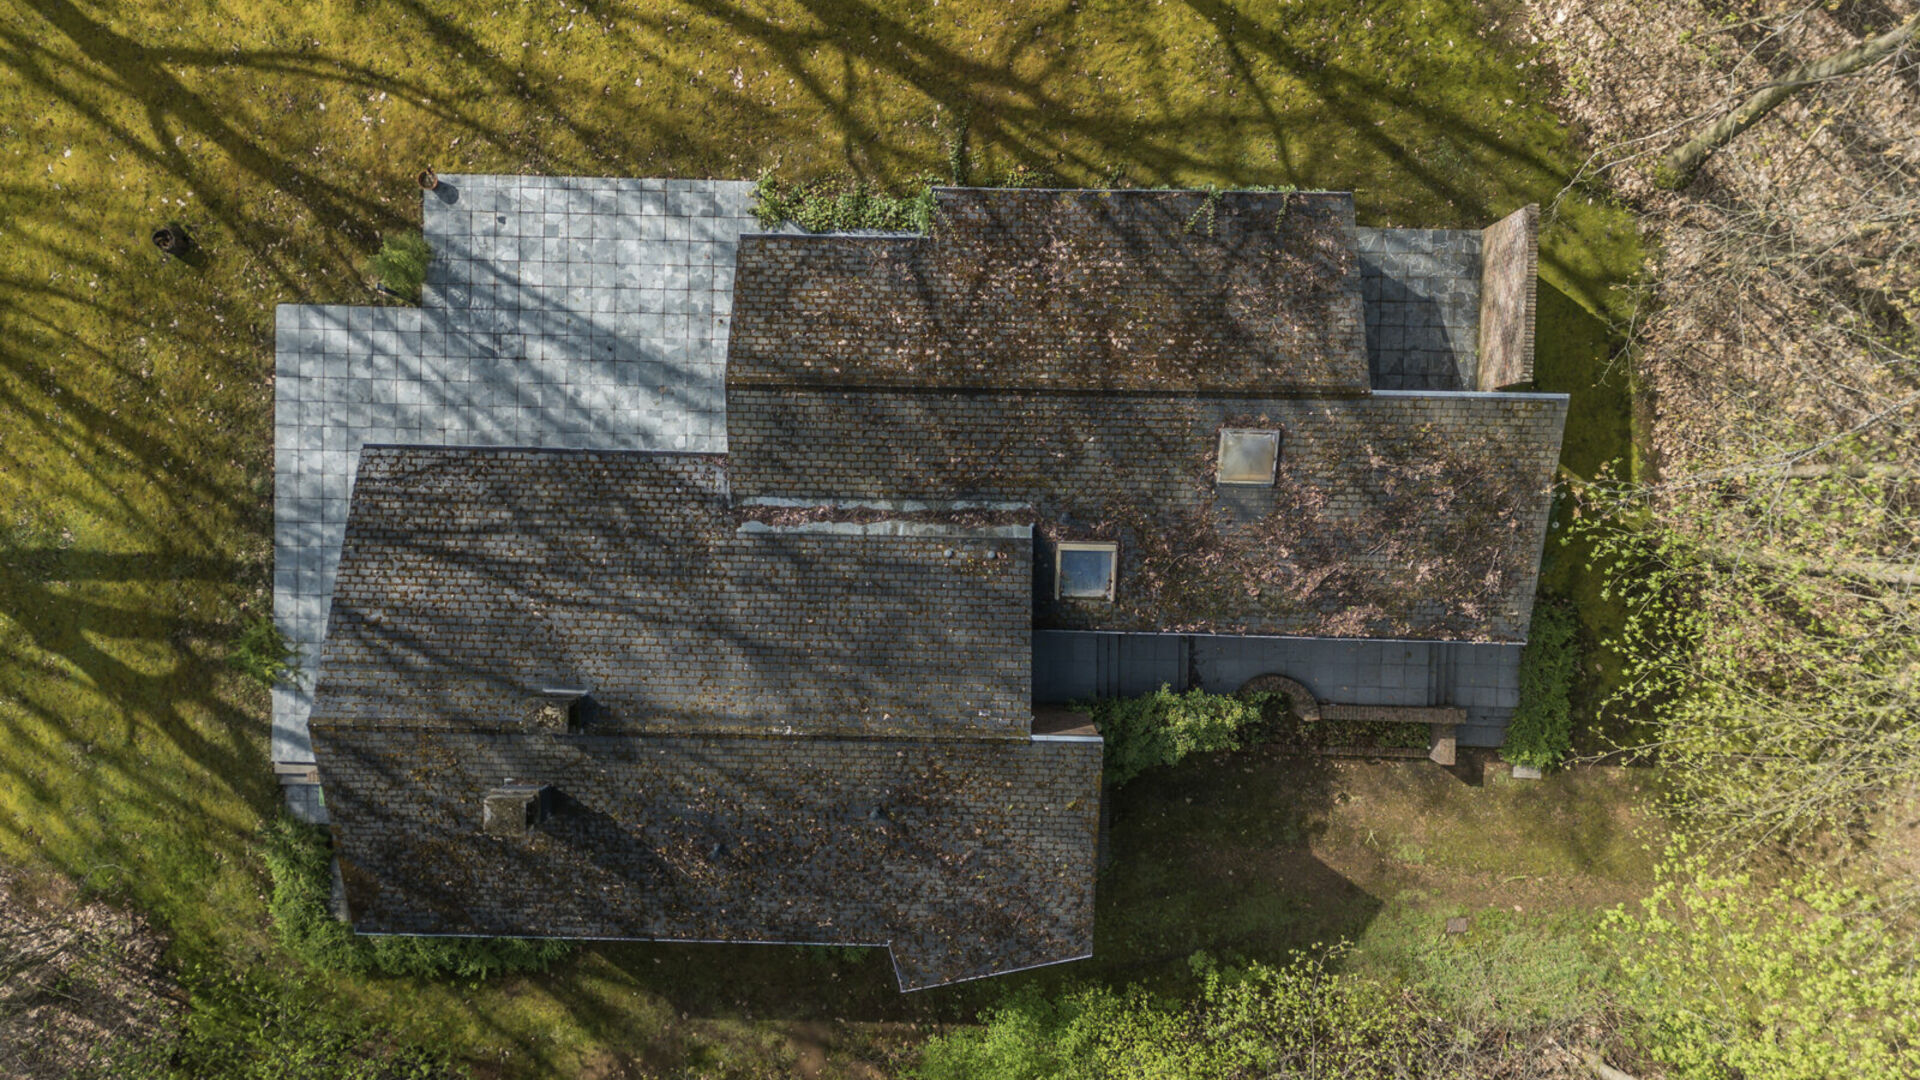 House for sale in Holsbeek